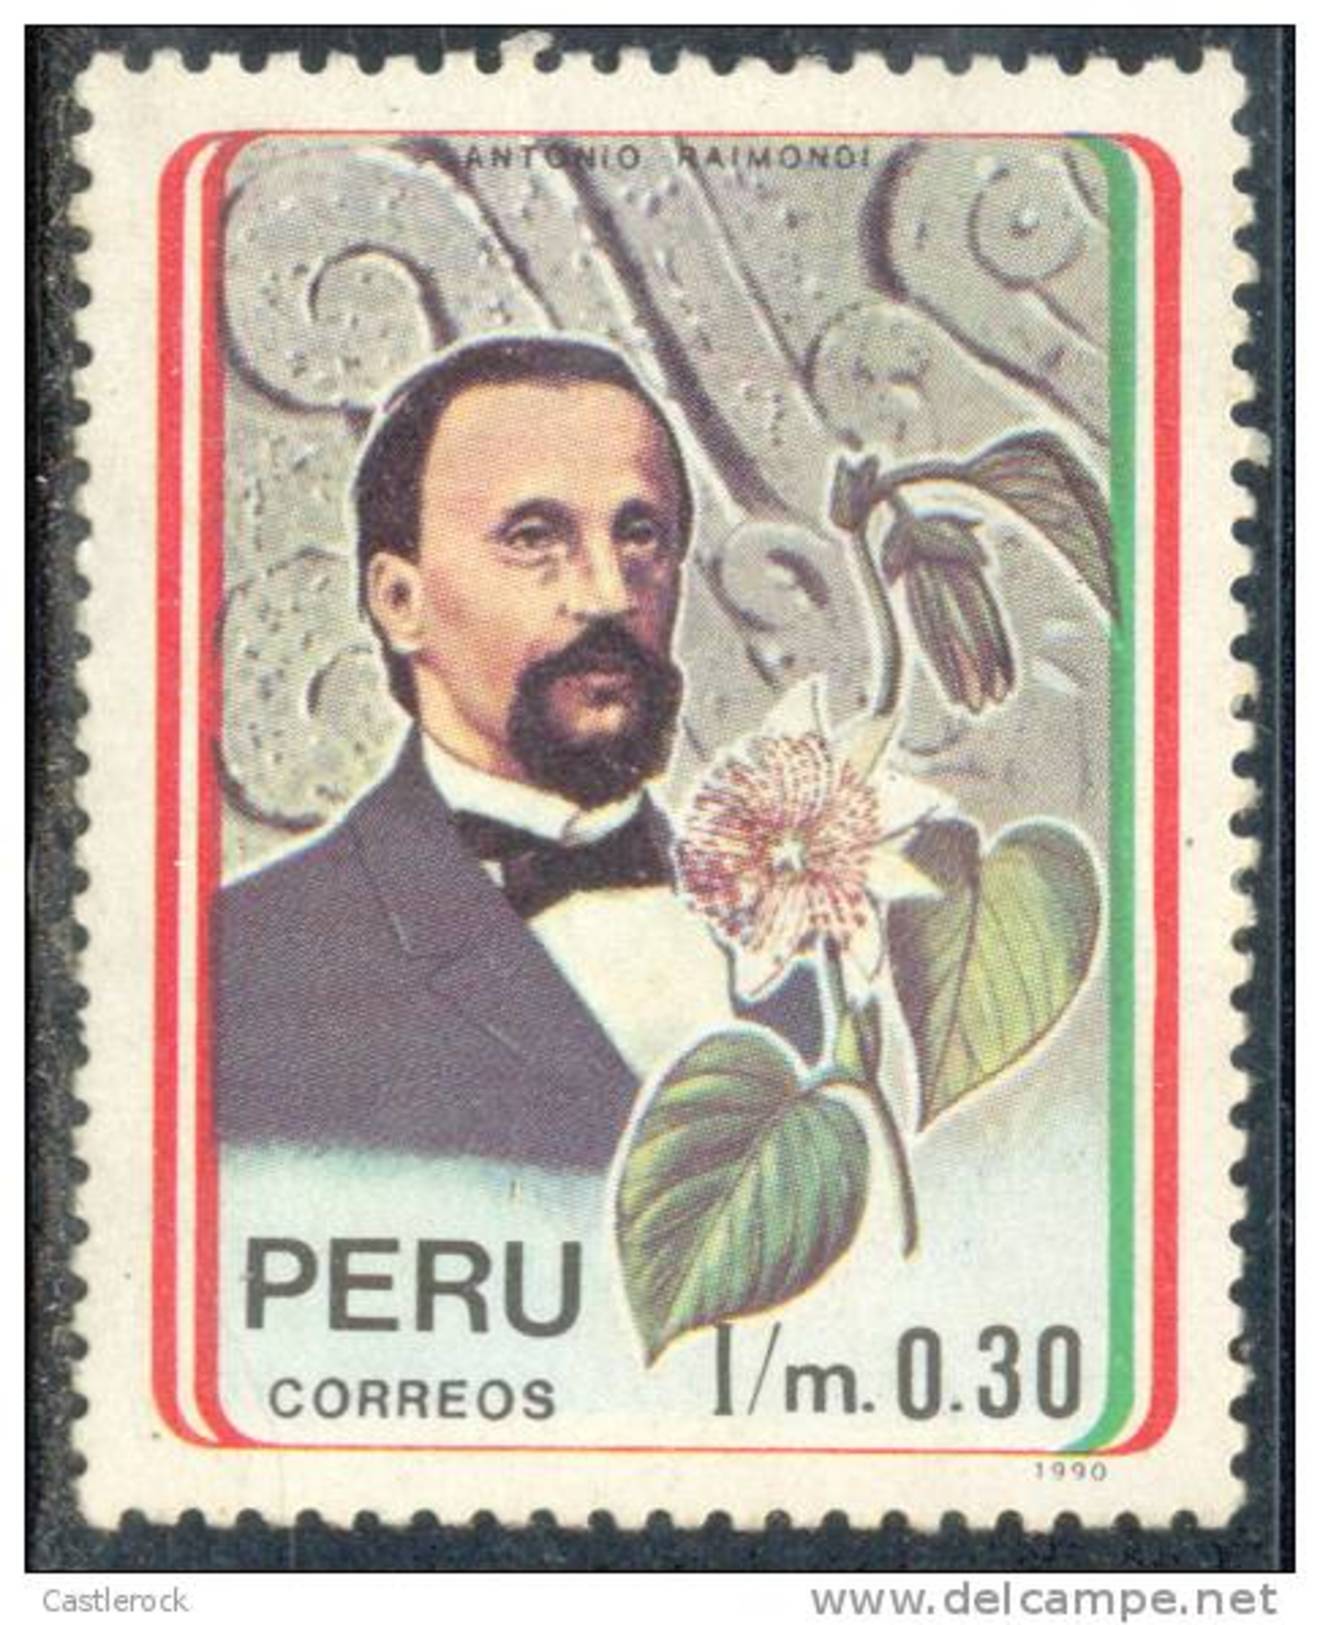 RN)1992, PERU, SCN 1020, HISTORY, 0.30 Im,ANTONIO RAIMONDI,NATURALIST AND PUBLISHER, DEATH CENT., MNH, STAMP - Peru